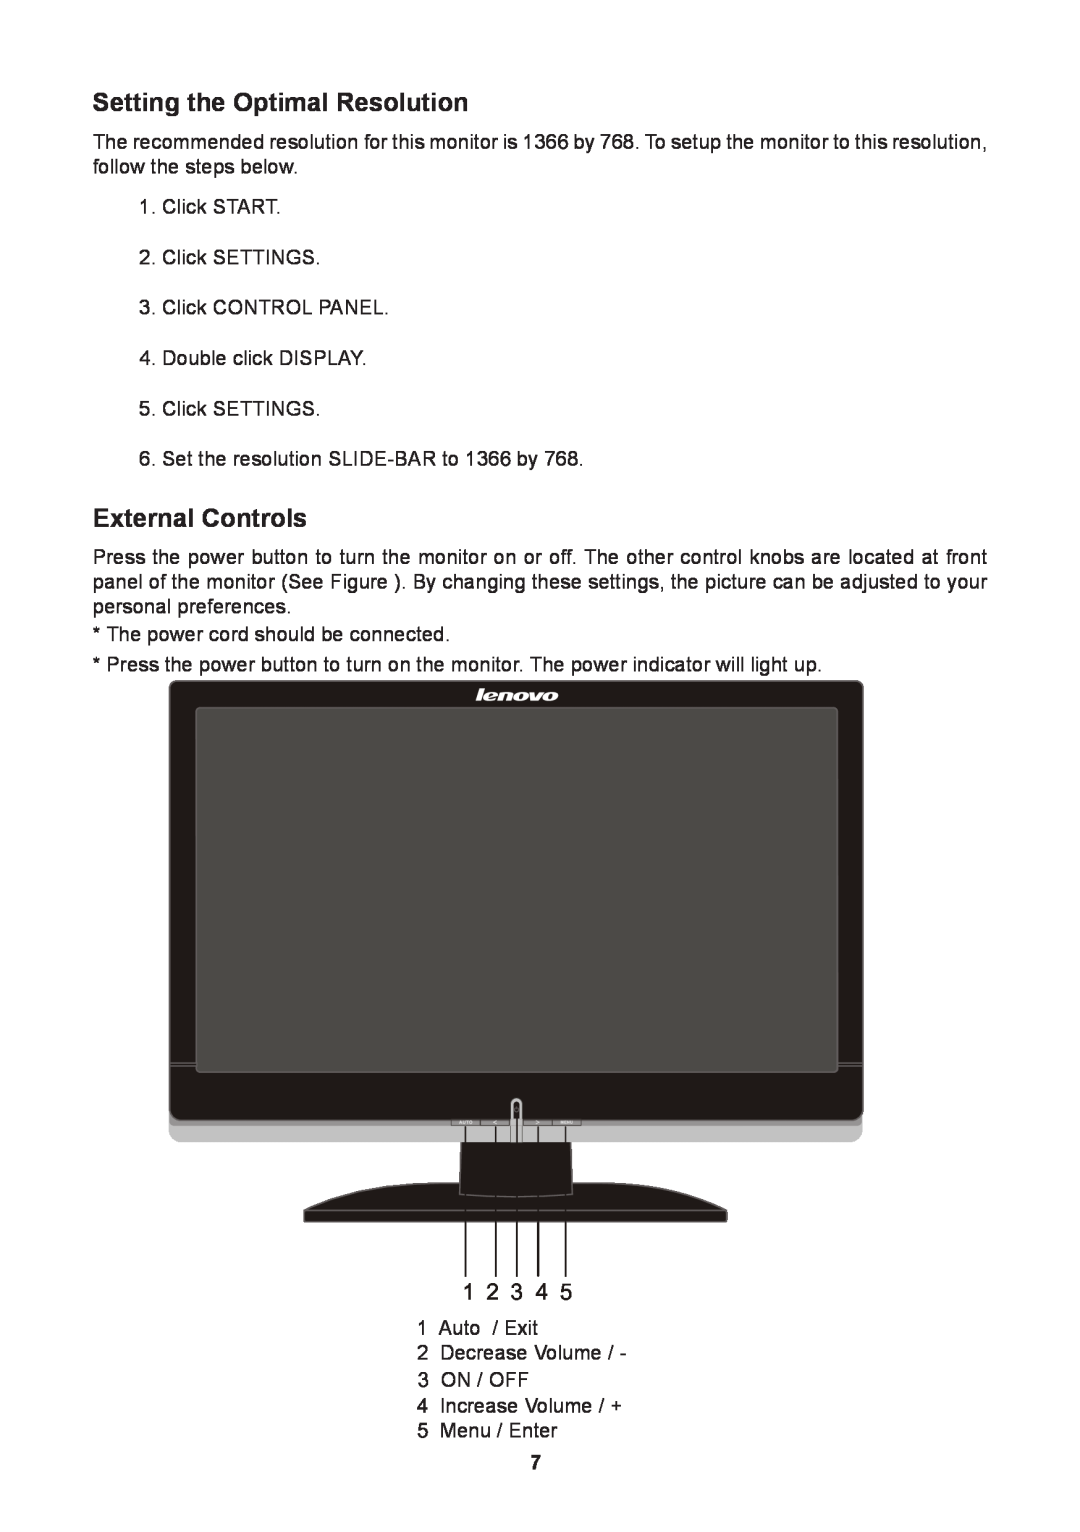 Lenovo D1960 manual Setting the Optimal Resolution, External Controls, 1 2 